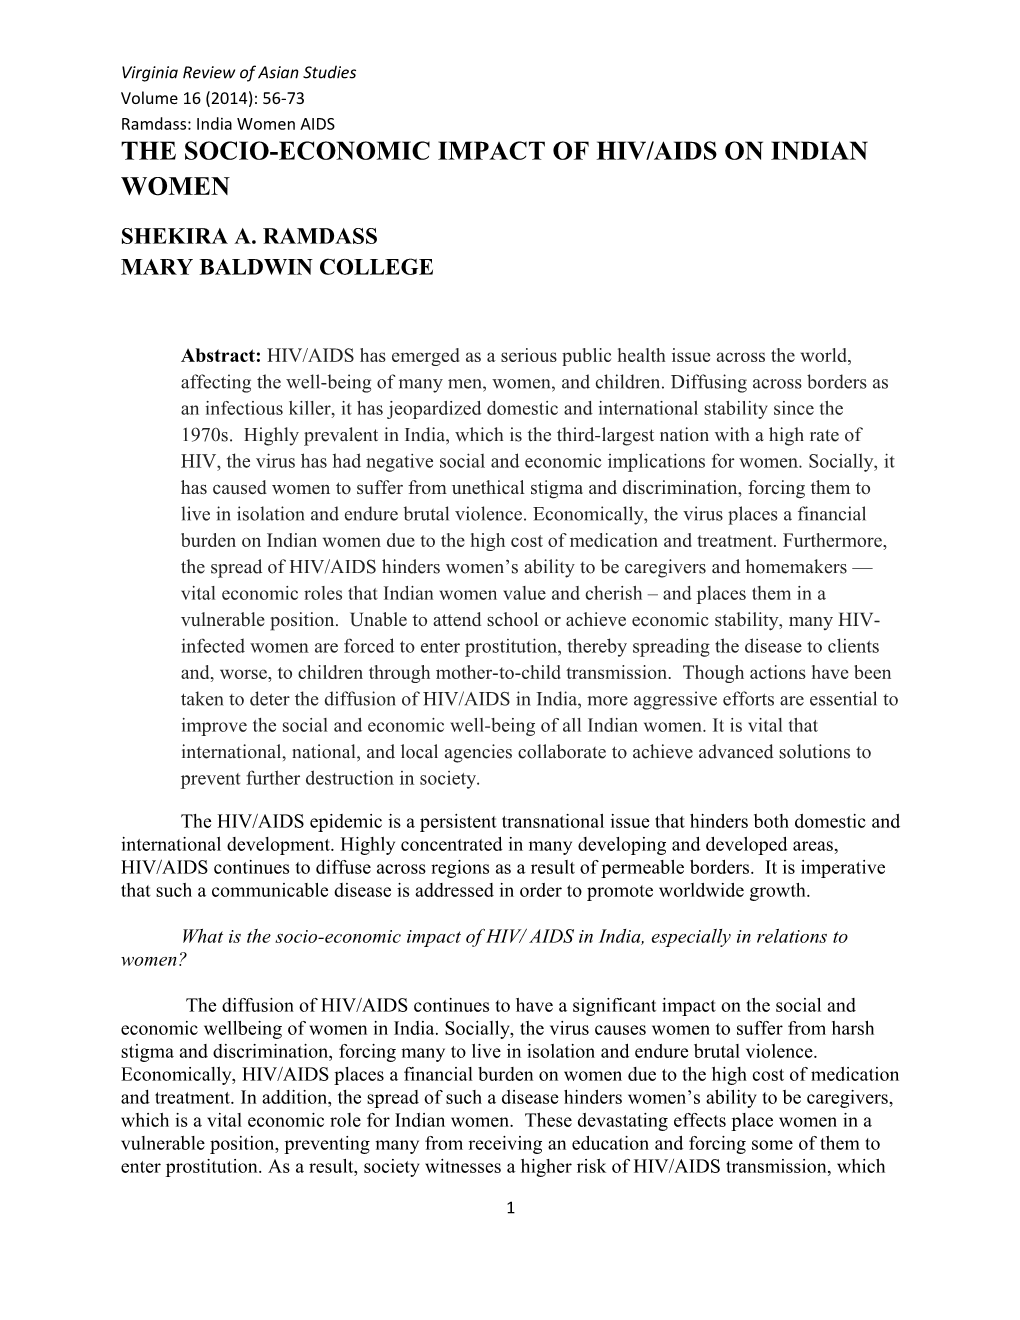 The Socio-Economic Impact of Hiv/Aids on Indian Women